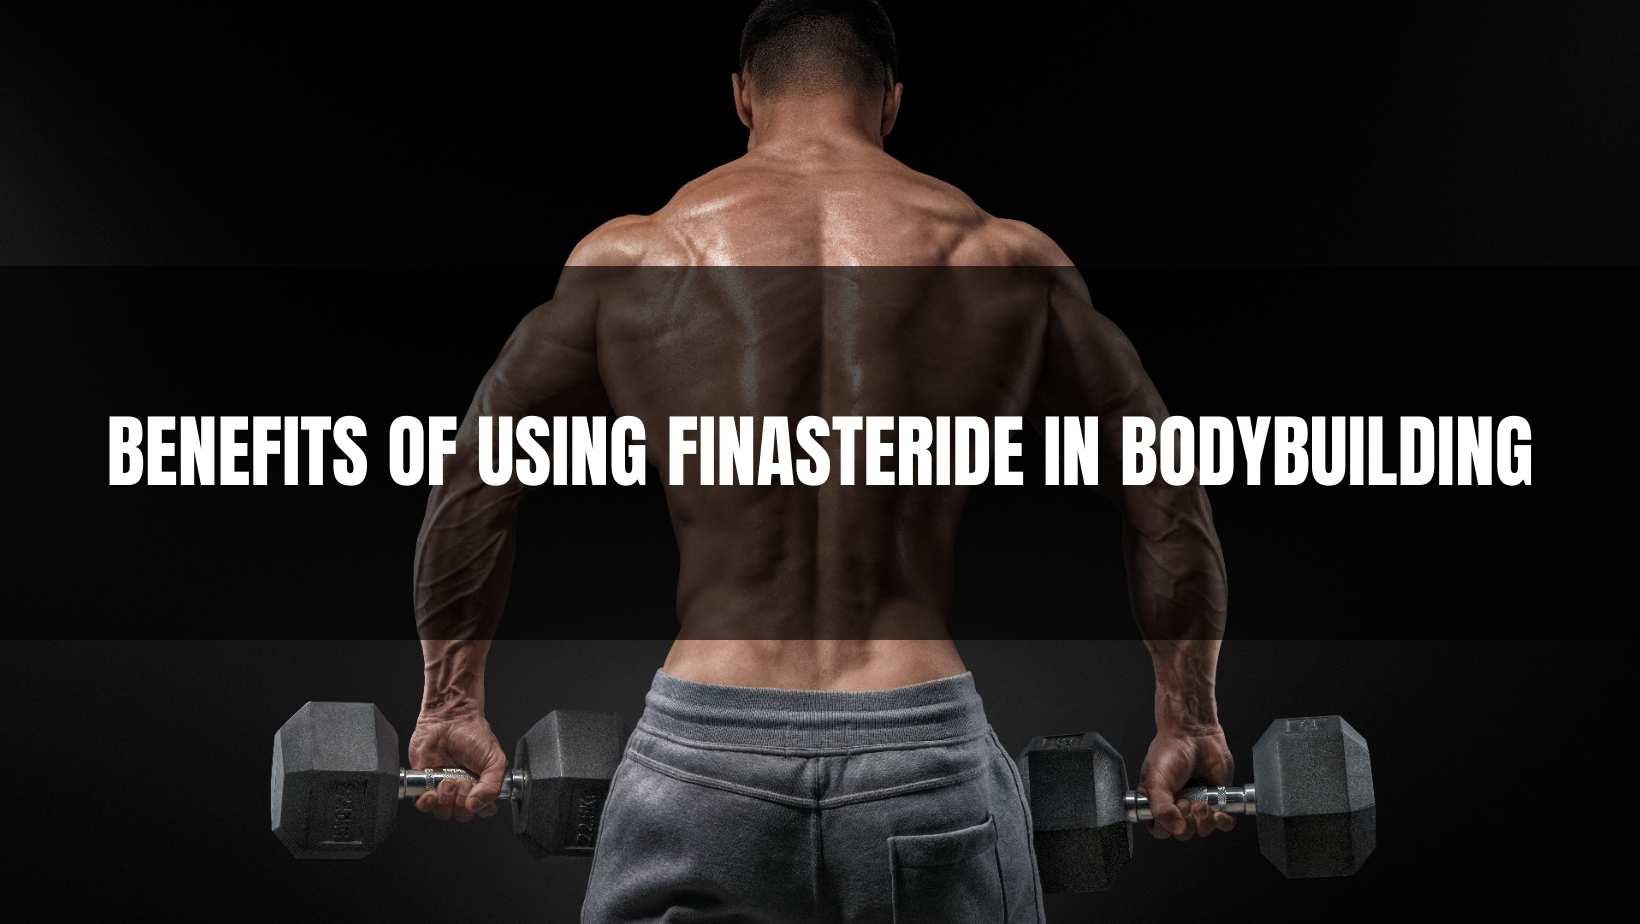 Finasteride in Bodybuilding